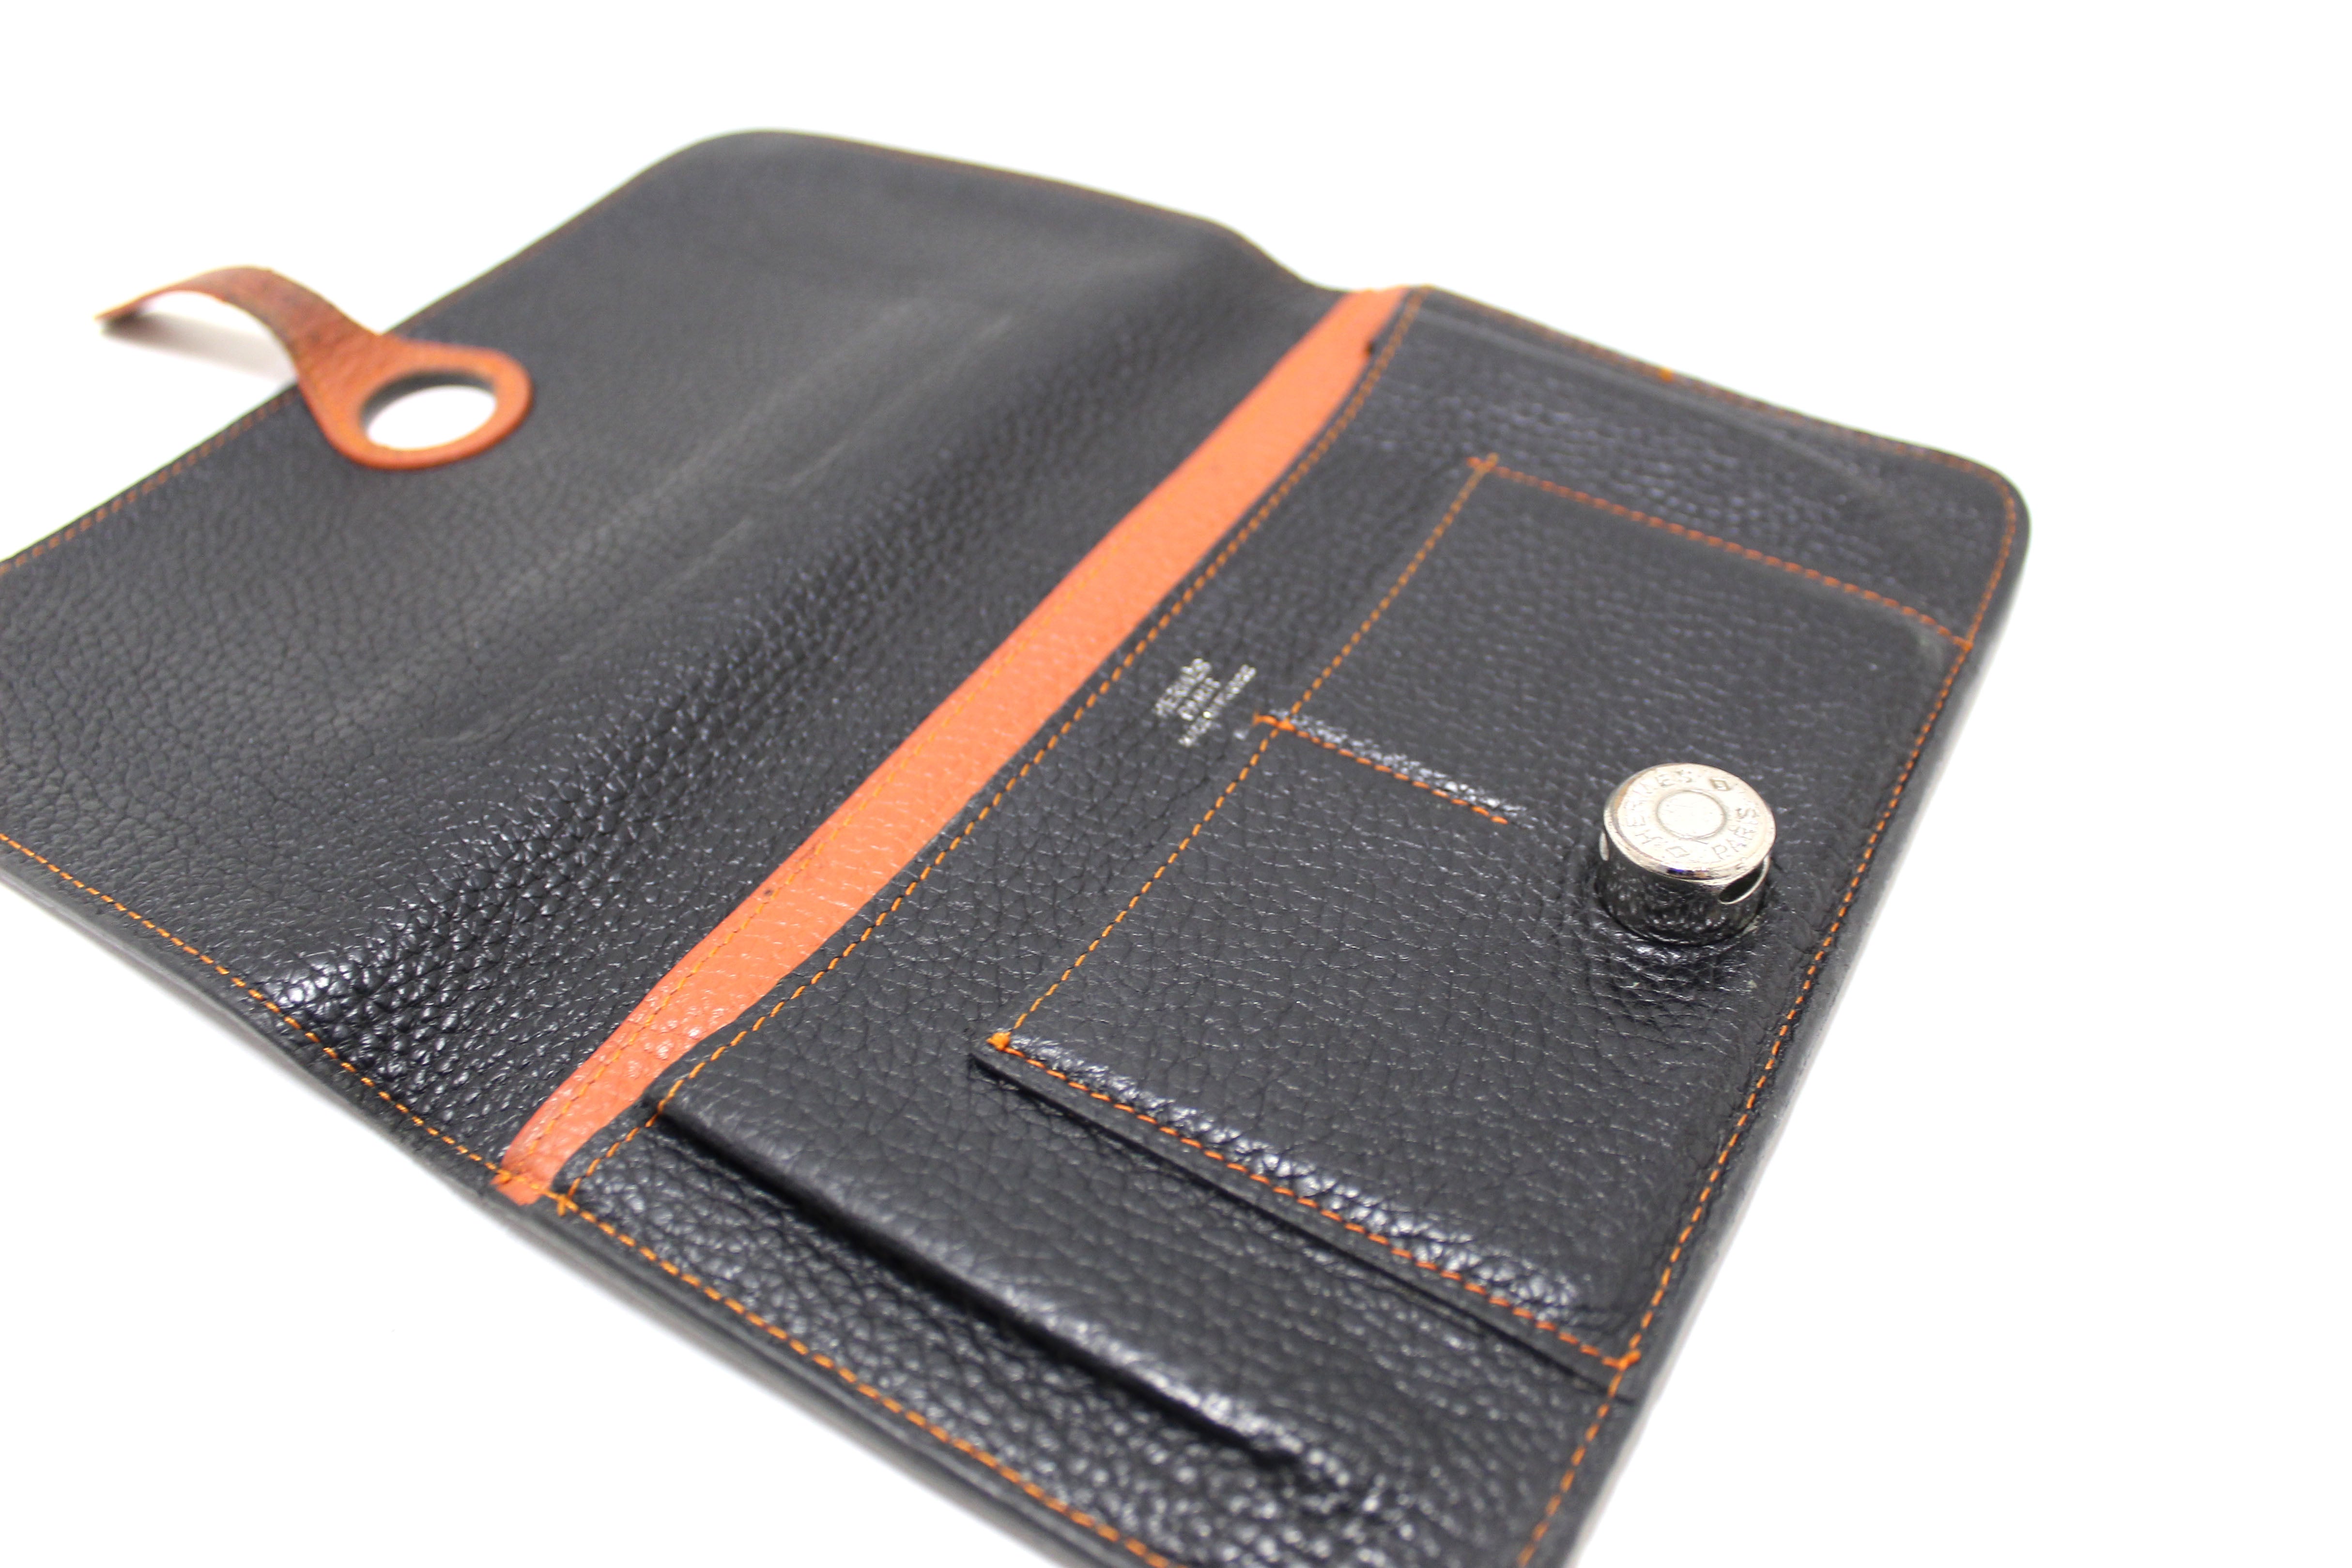 Authentic Hermes Black/Brown Bi-Color Togo Leather Dogon Wallet